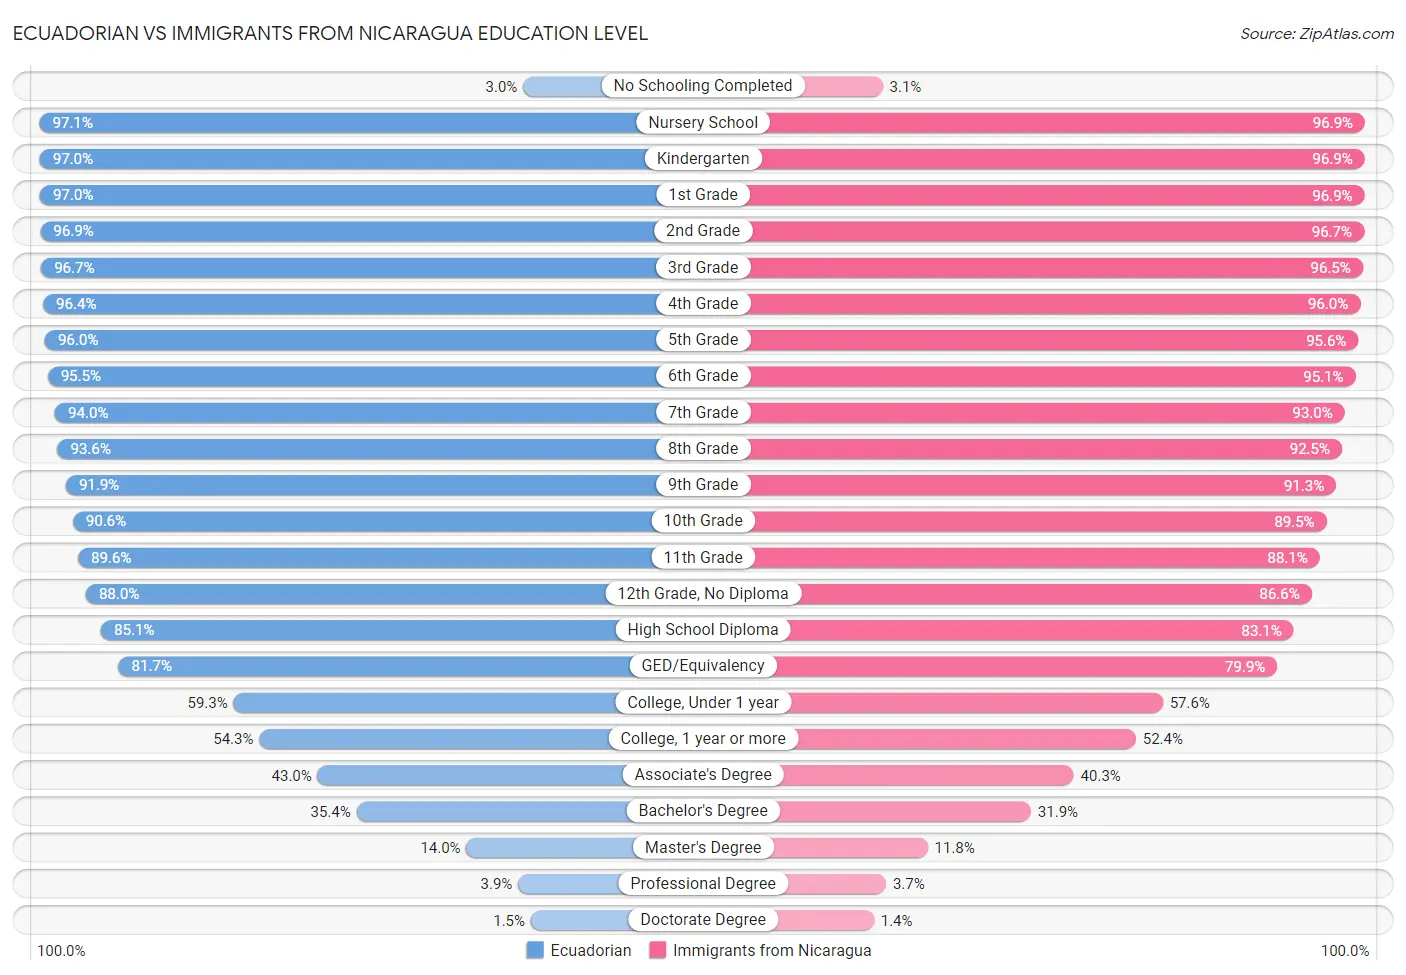 Ecuadorian vs Immigrants from Nicaragua Education Level